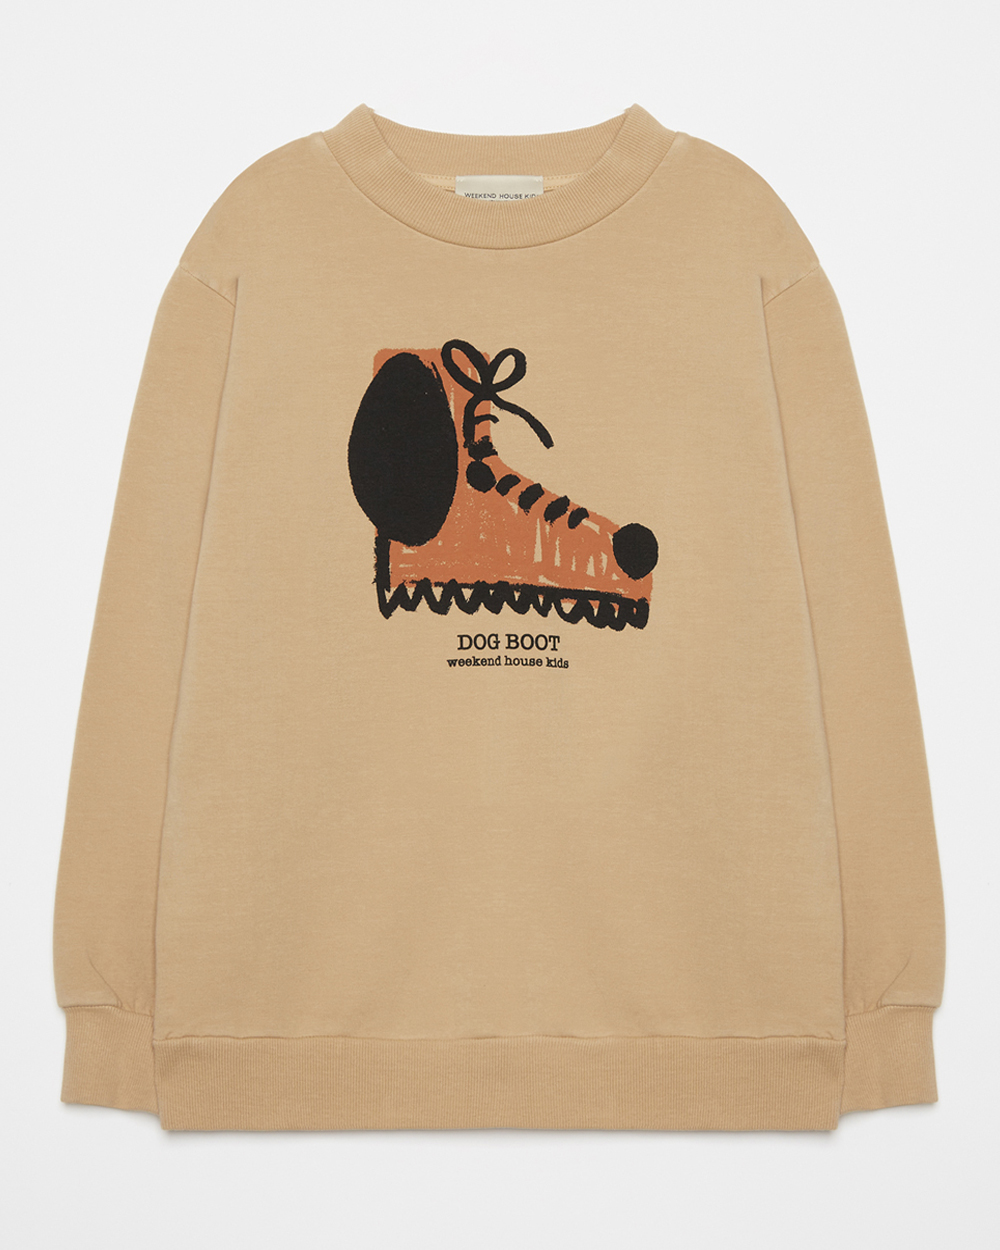 [WEEKEND HOUSE KIDS]Dog boots sweatshirt /Dog boots sweatshirt